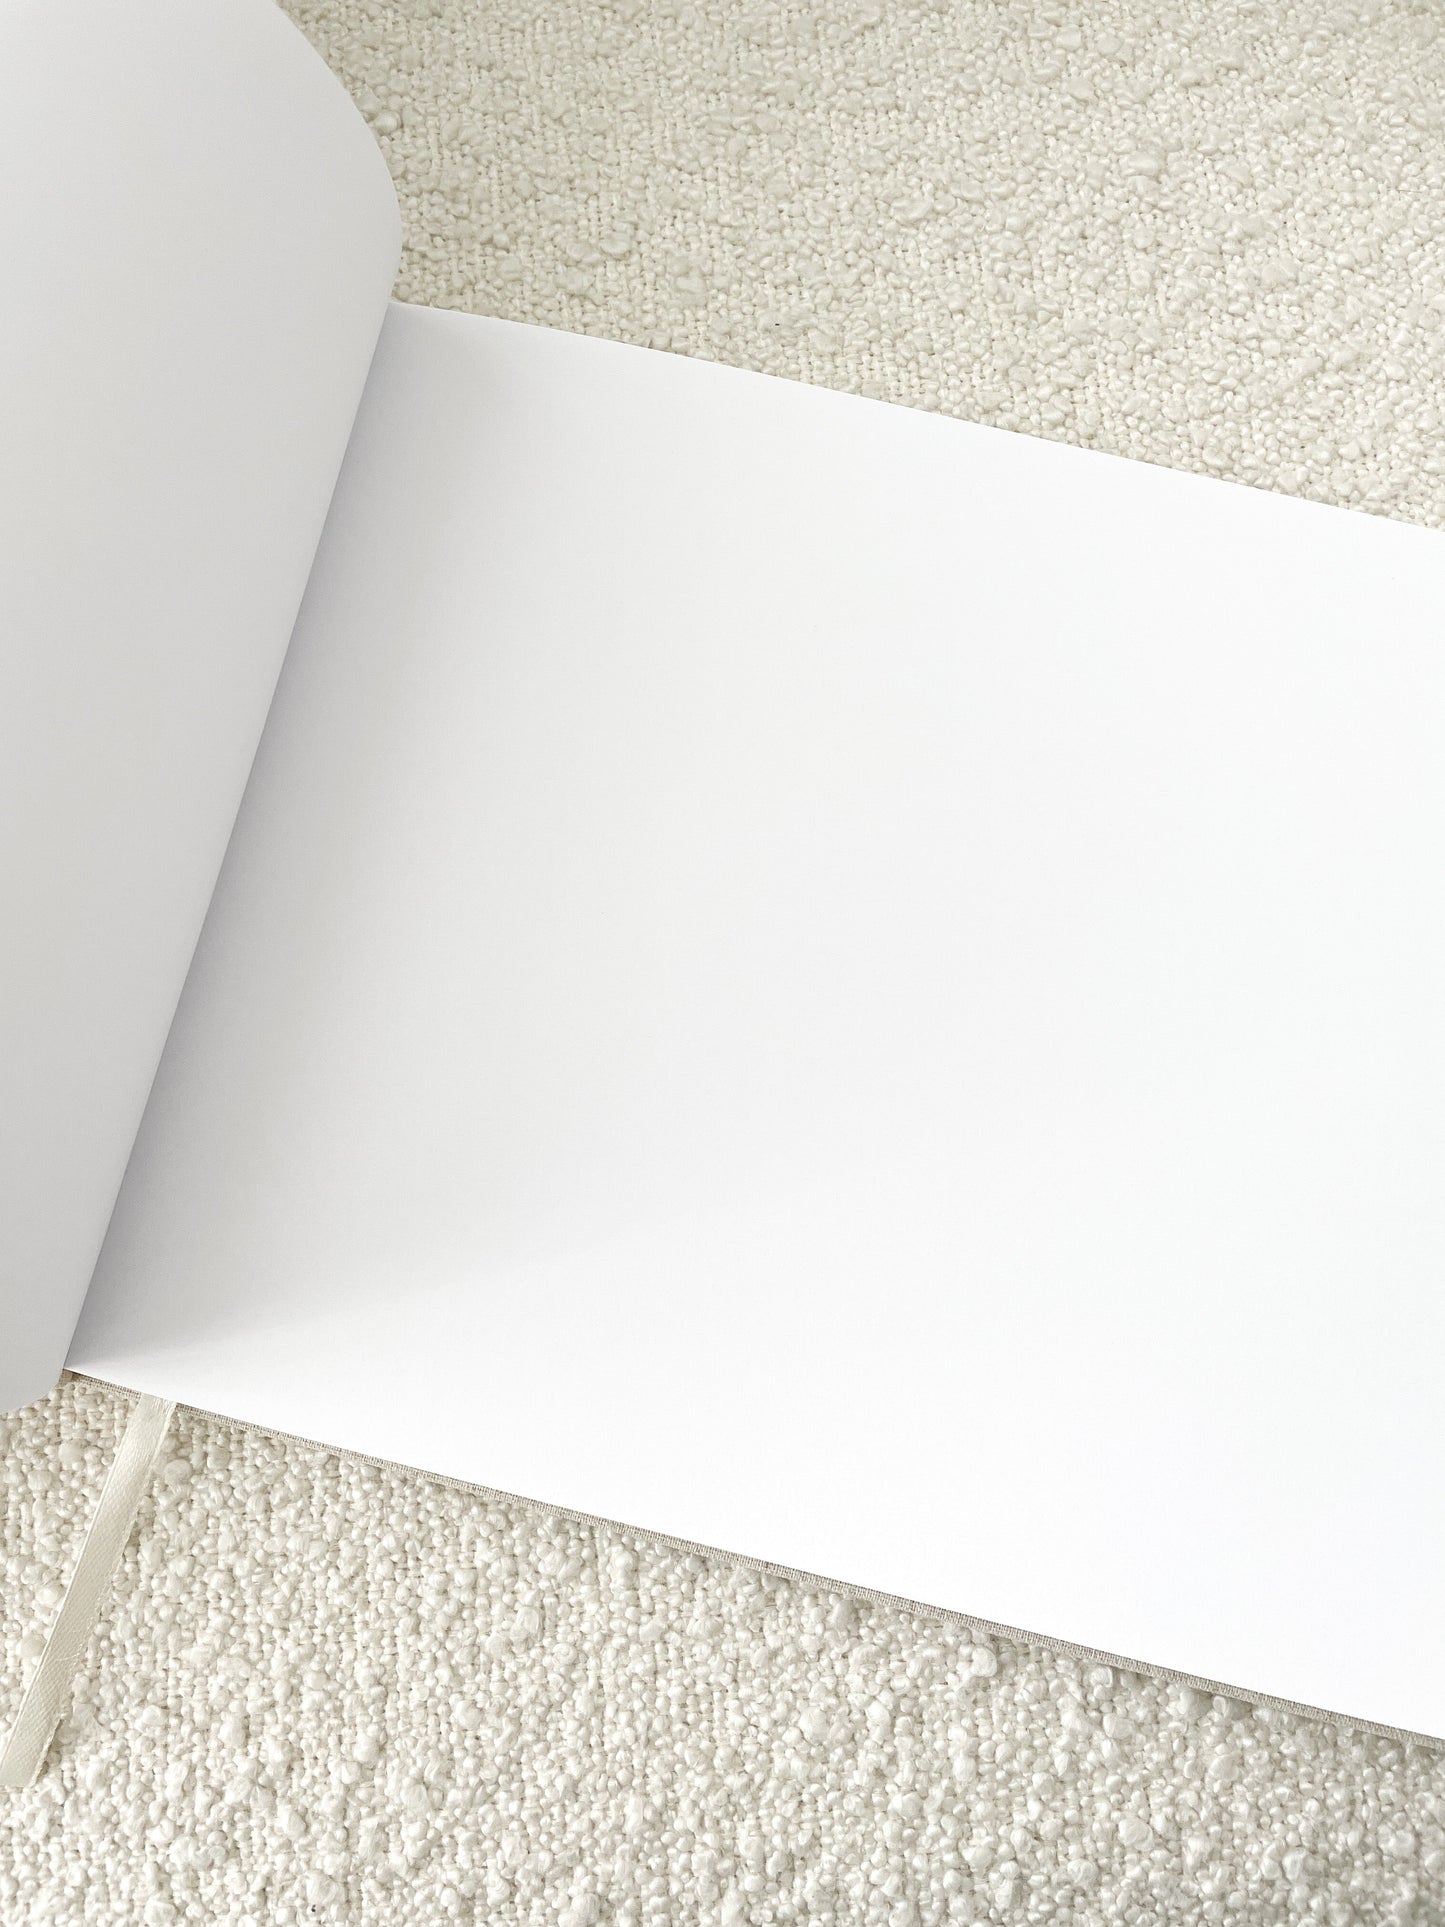 
                  
                    Minimalistic Linen Wedding Guest Book - Vorfreude Stationery
                  
                